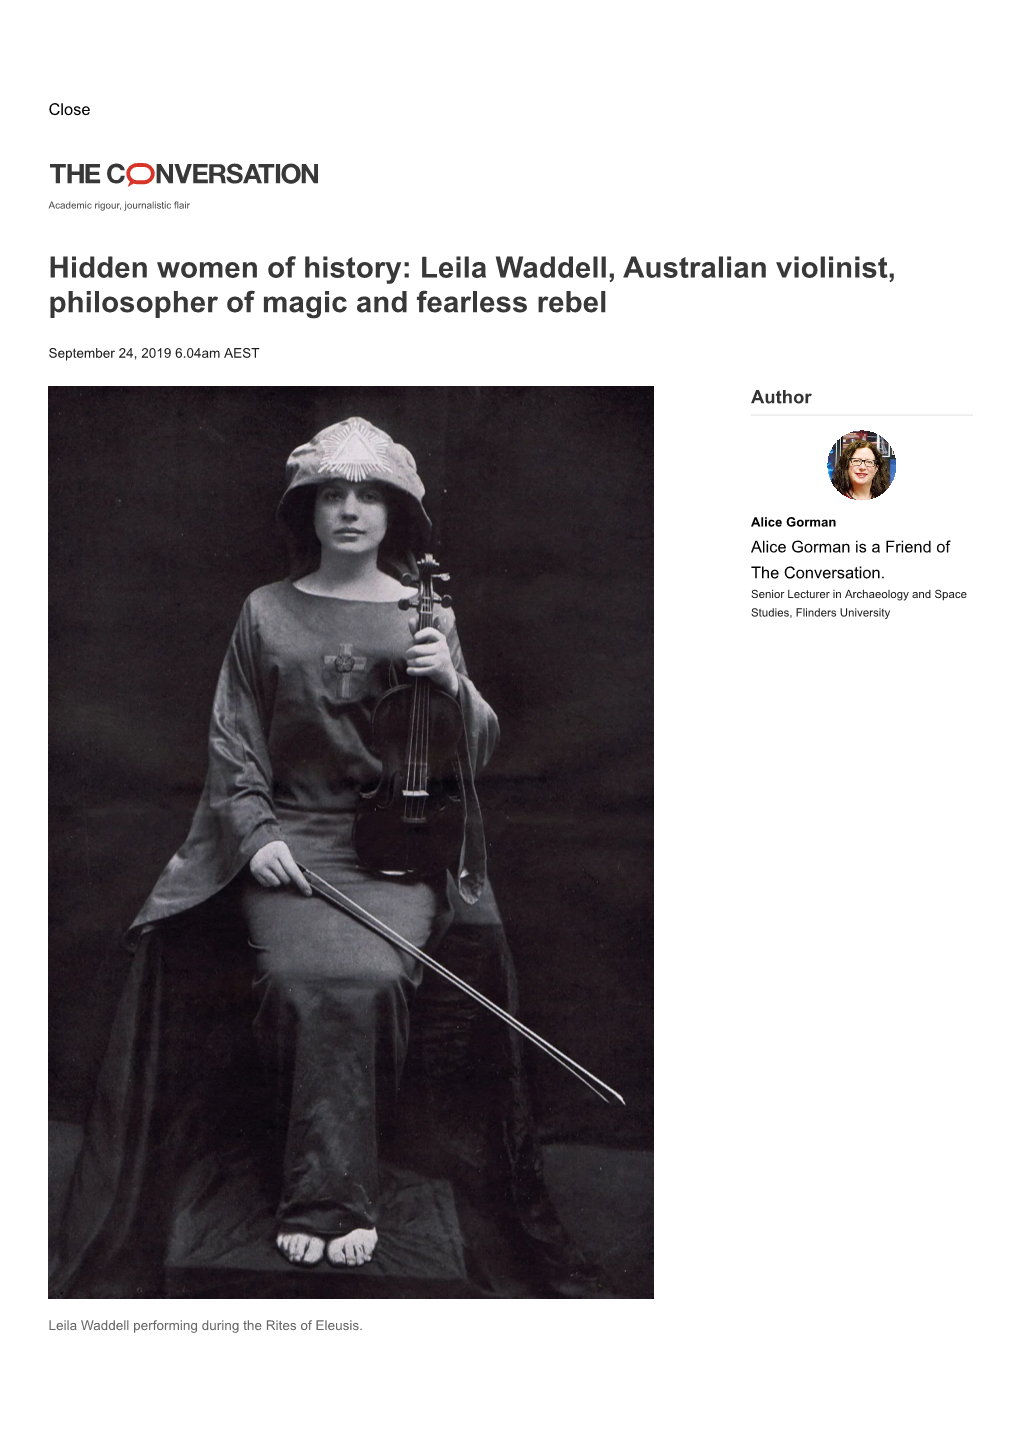 Hidden Women of History: Leila Waddell, Australian Violinist, Philosopher of Magic and Fearless Rebel